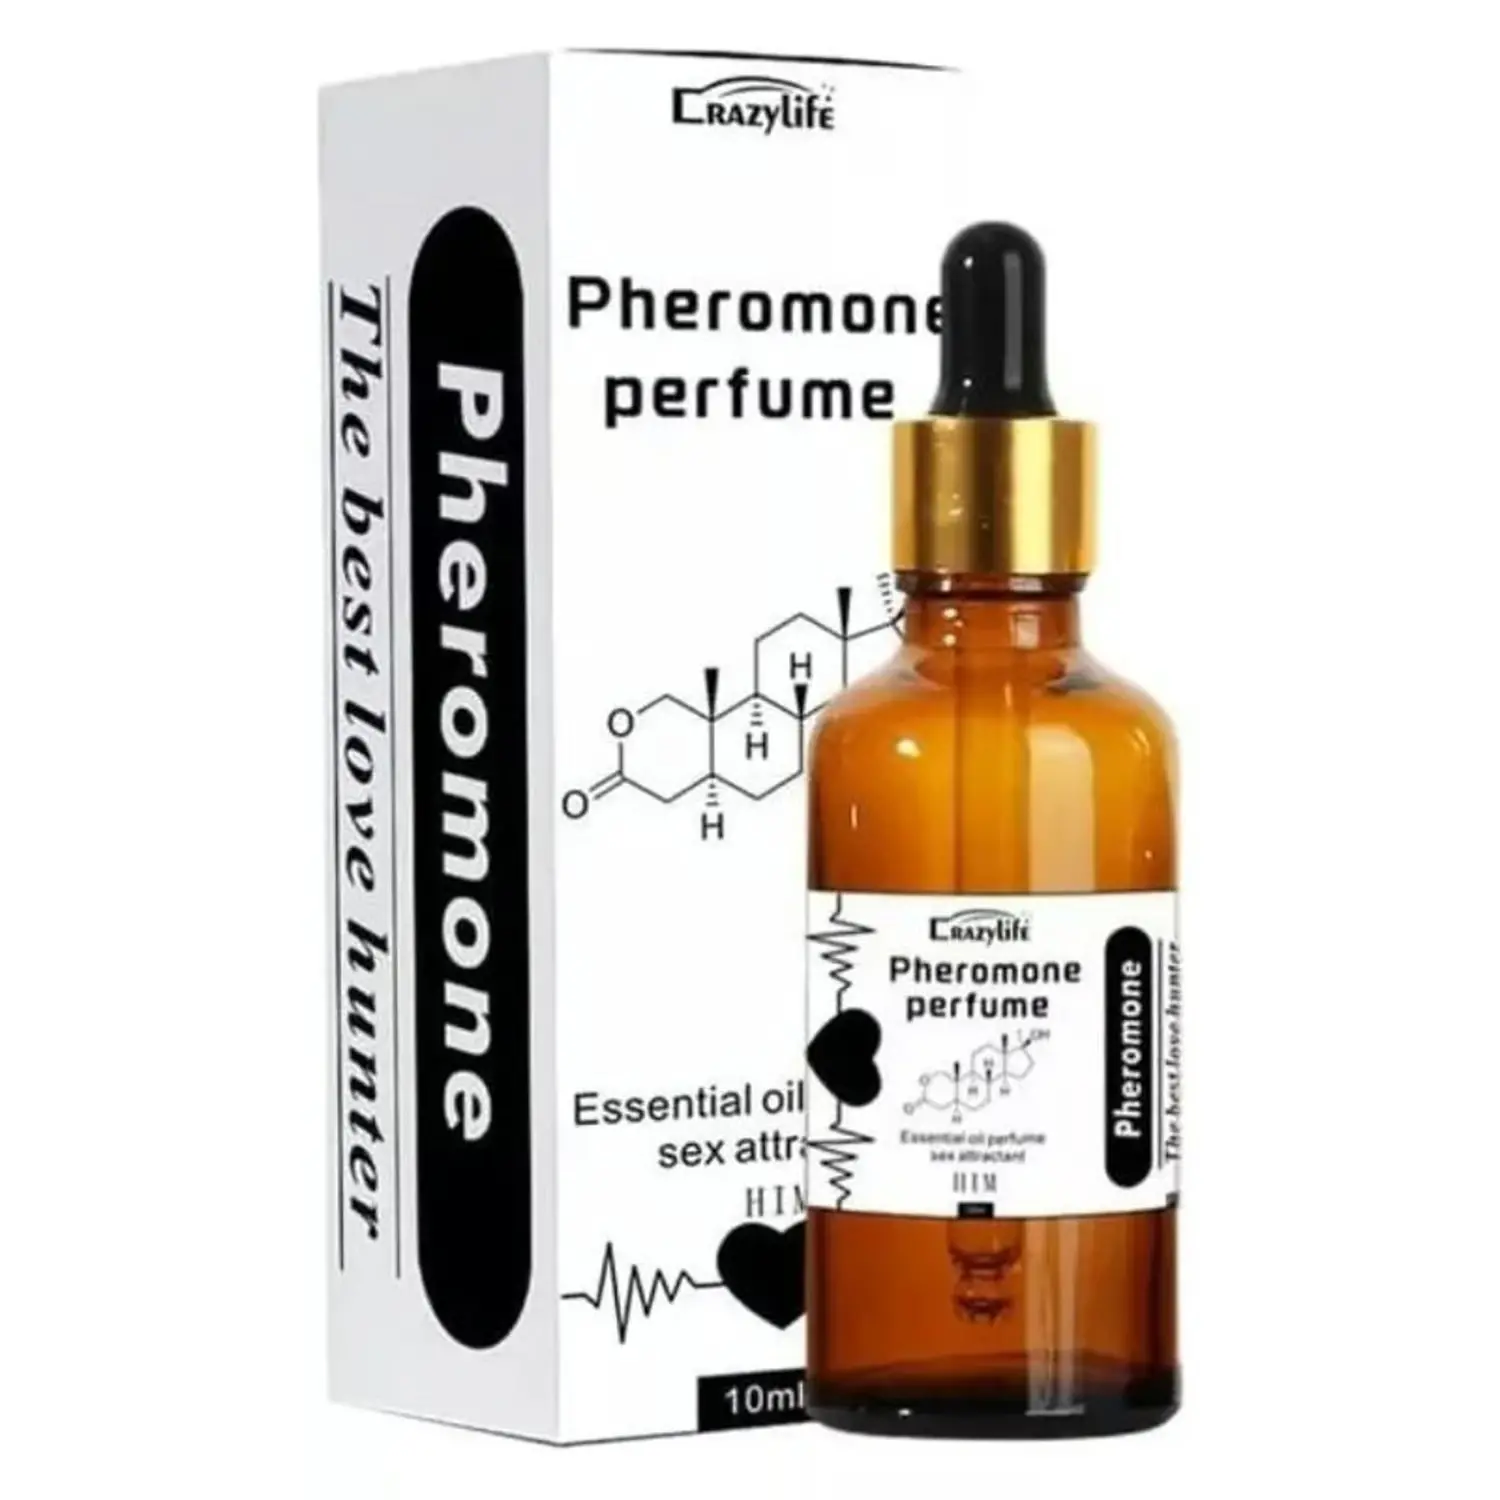 PHEROMONE Perfume Con Feromona Para Atraer Mujeres - SEXSHOP